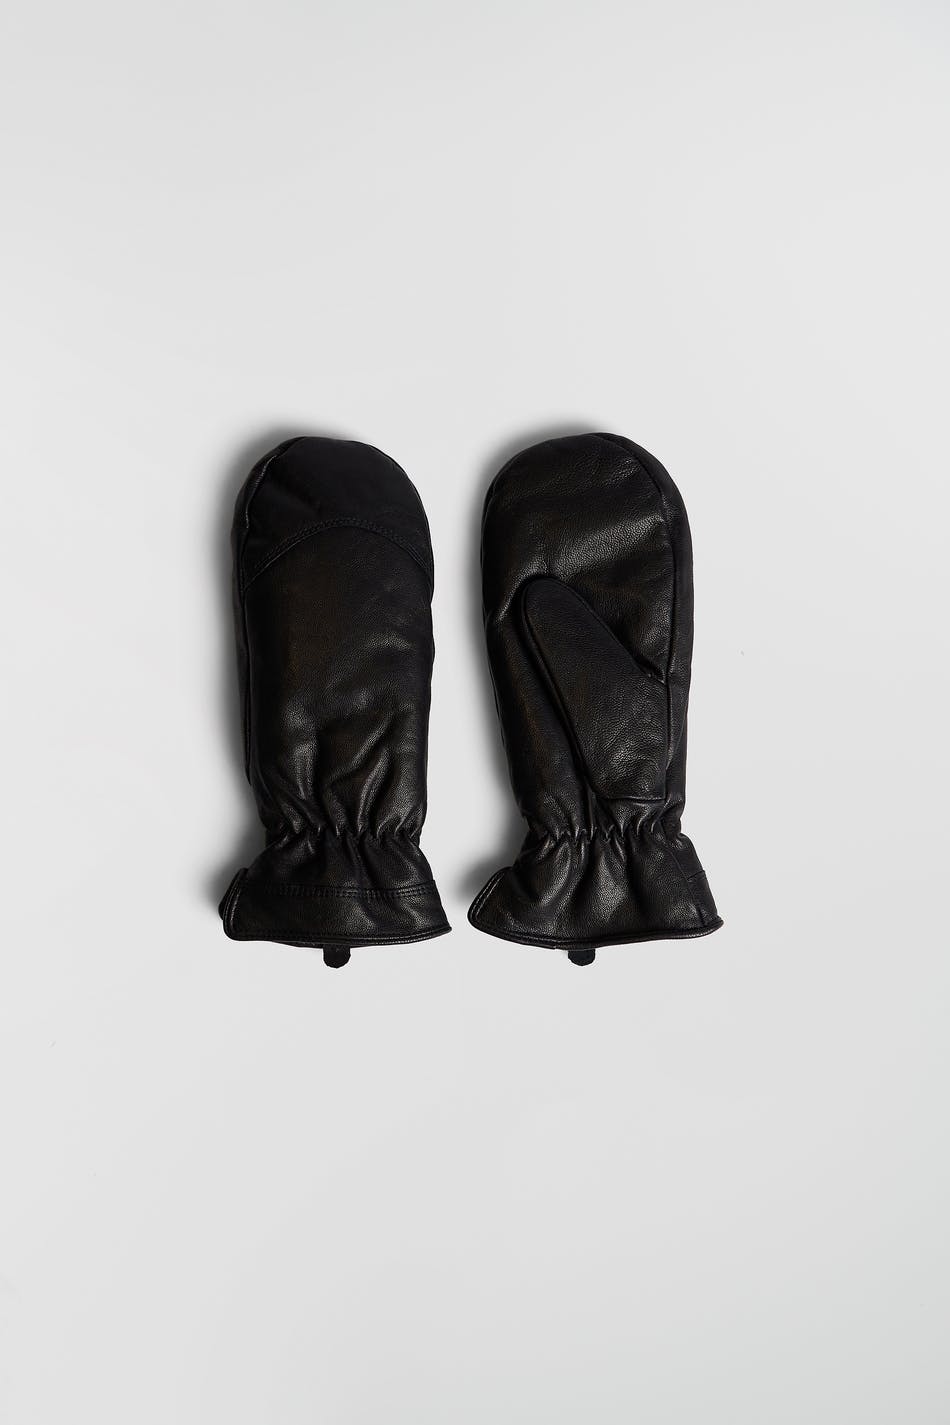 Gina Tricot Vega leather mitten M/L  Black (9000)